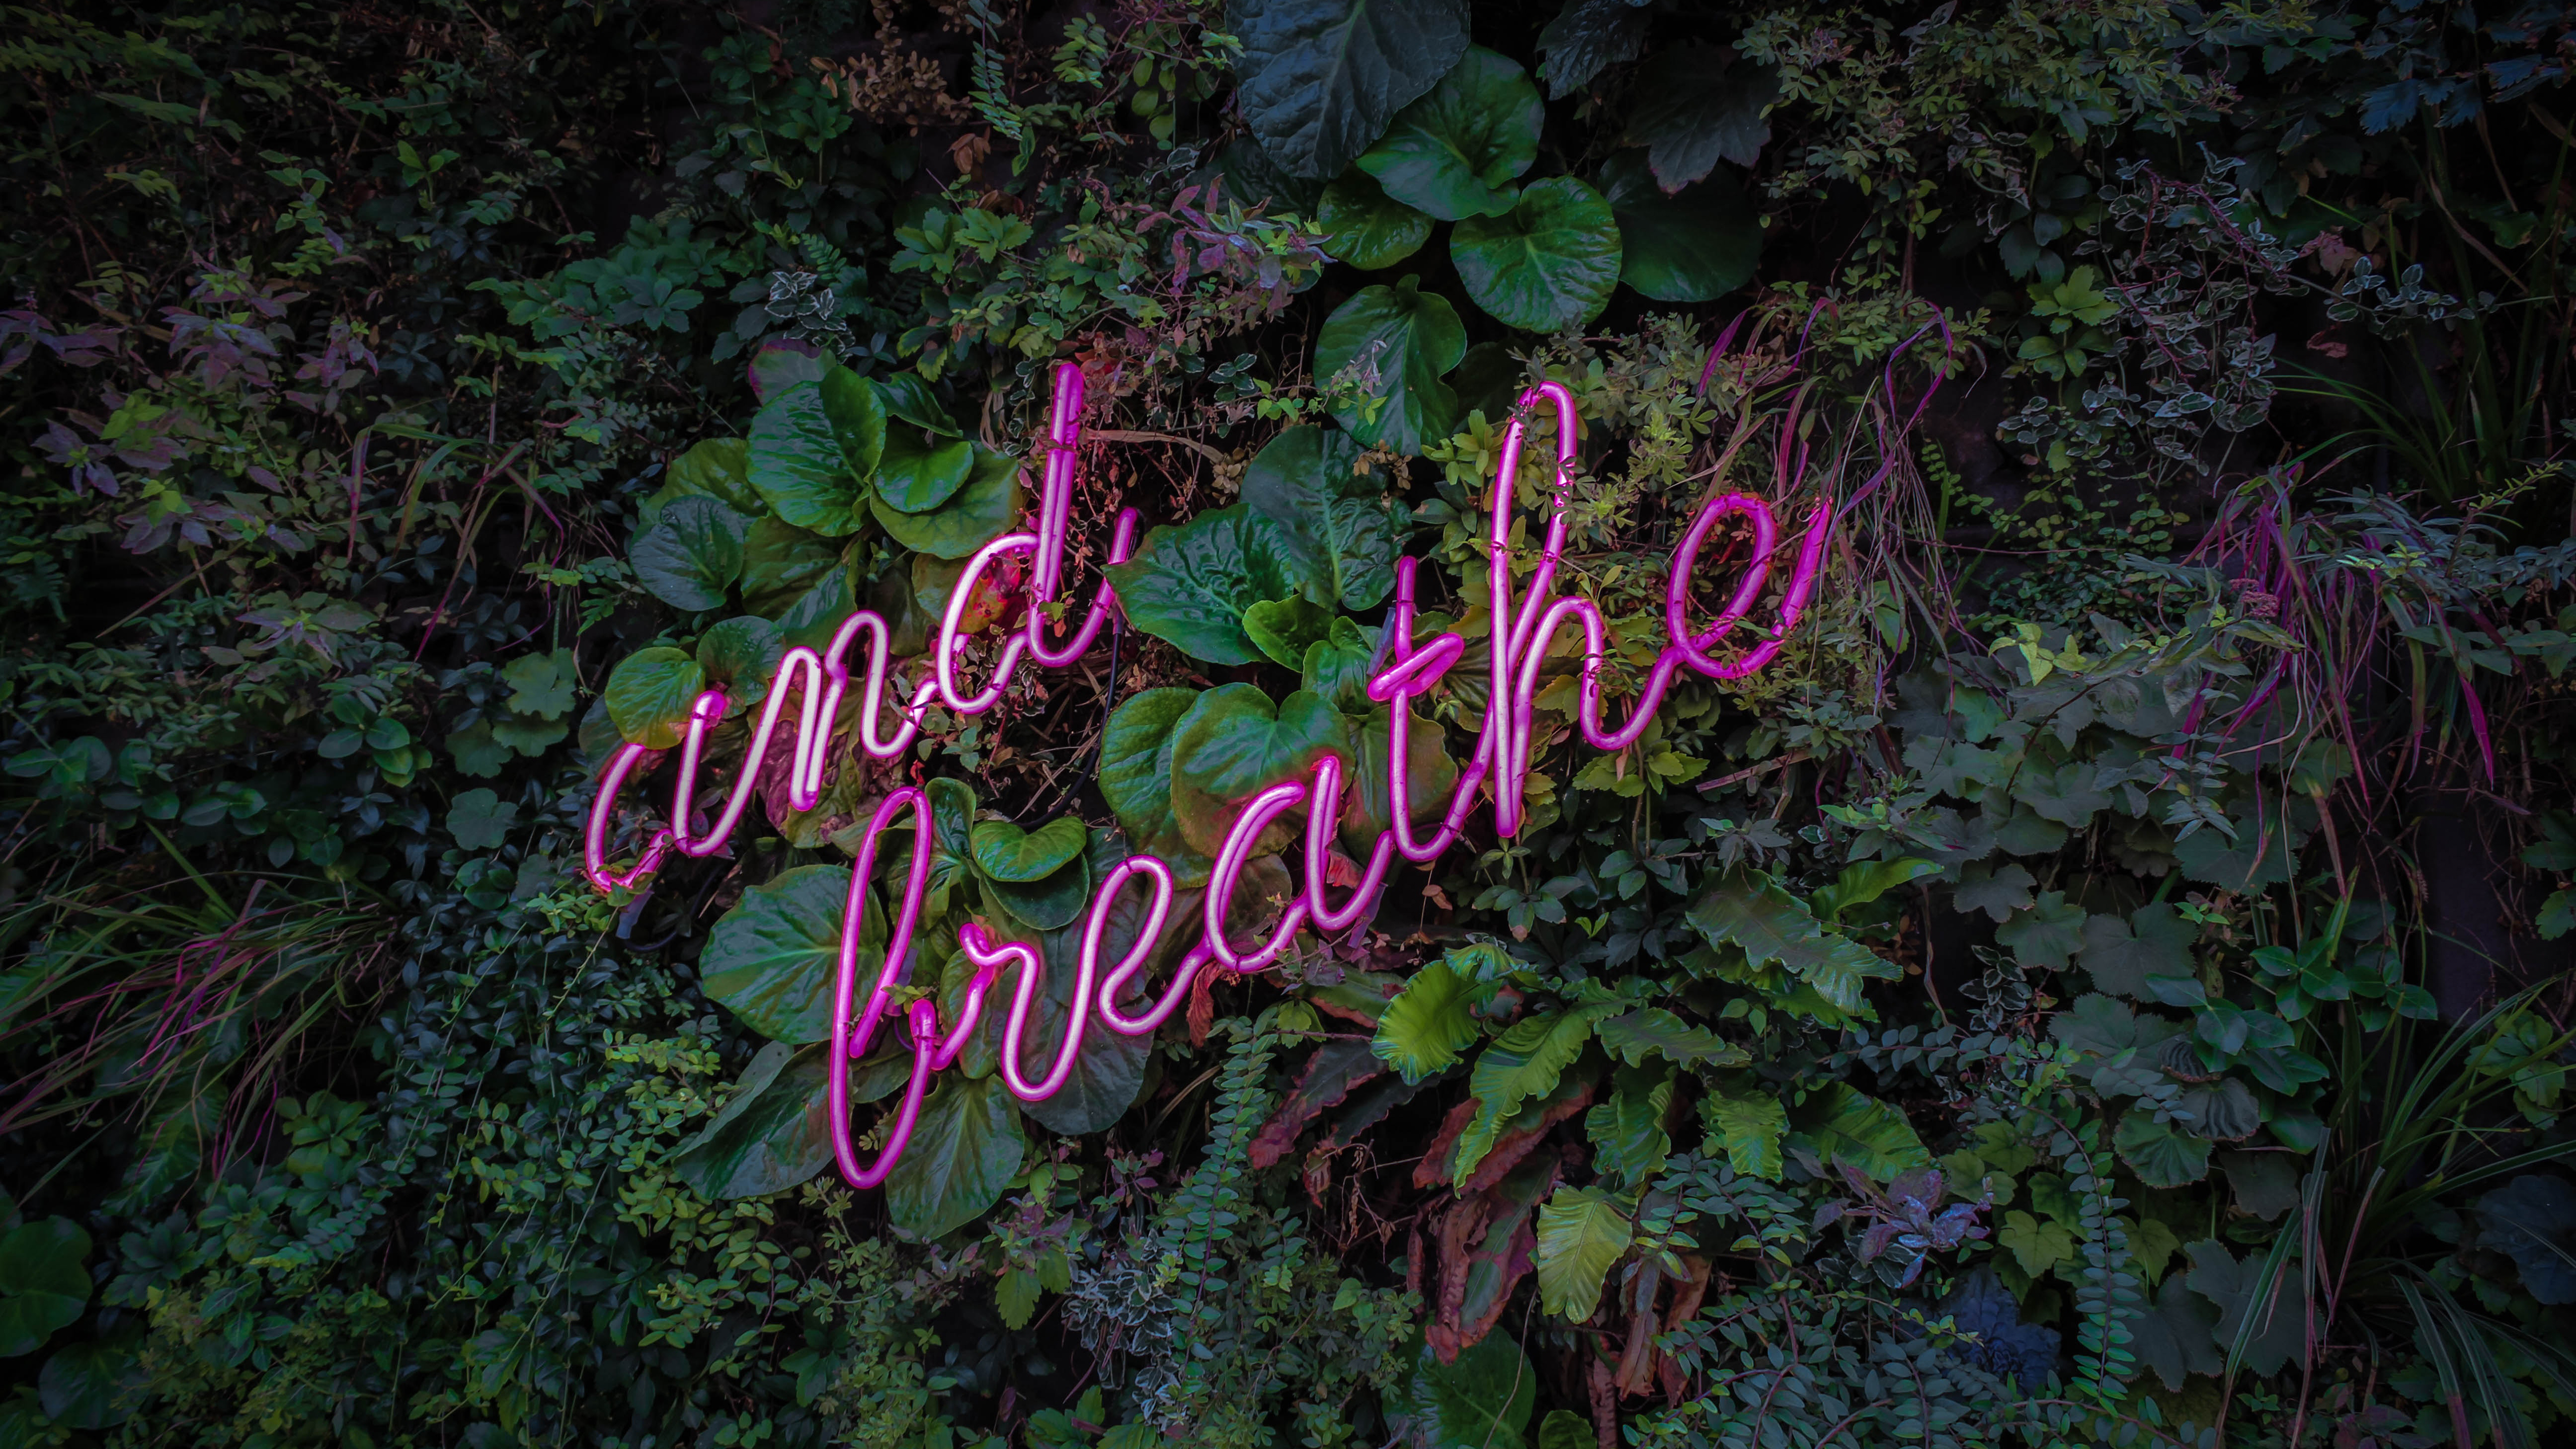 Breathe Neon Sign 5K